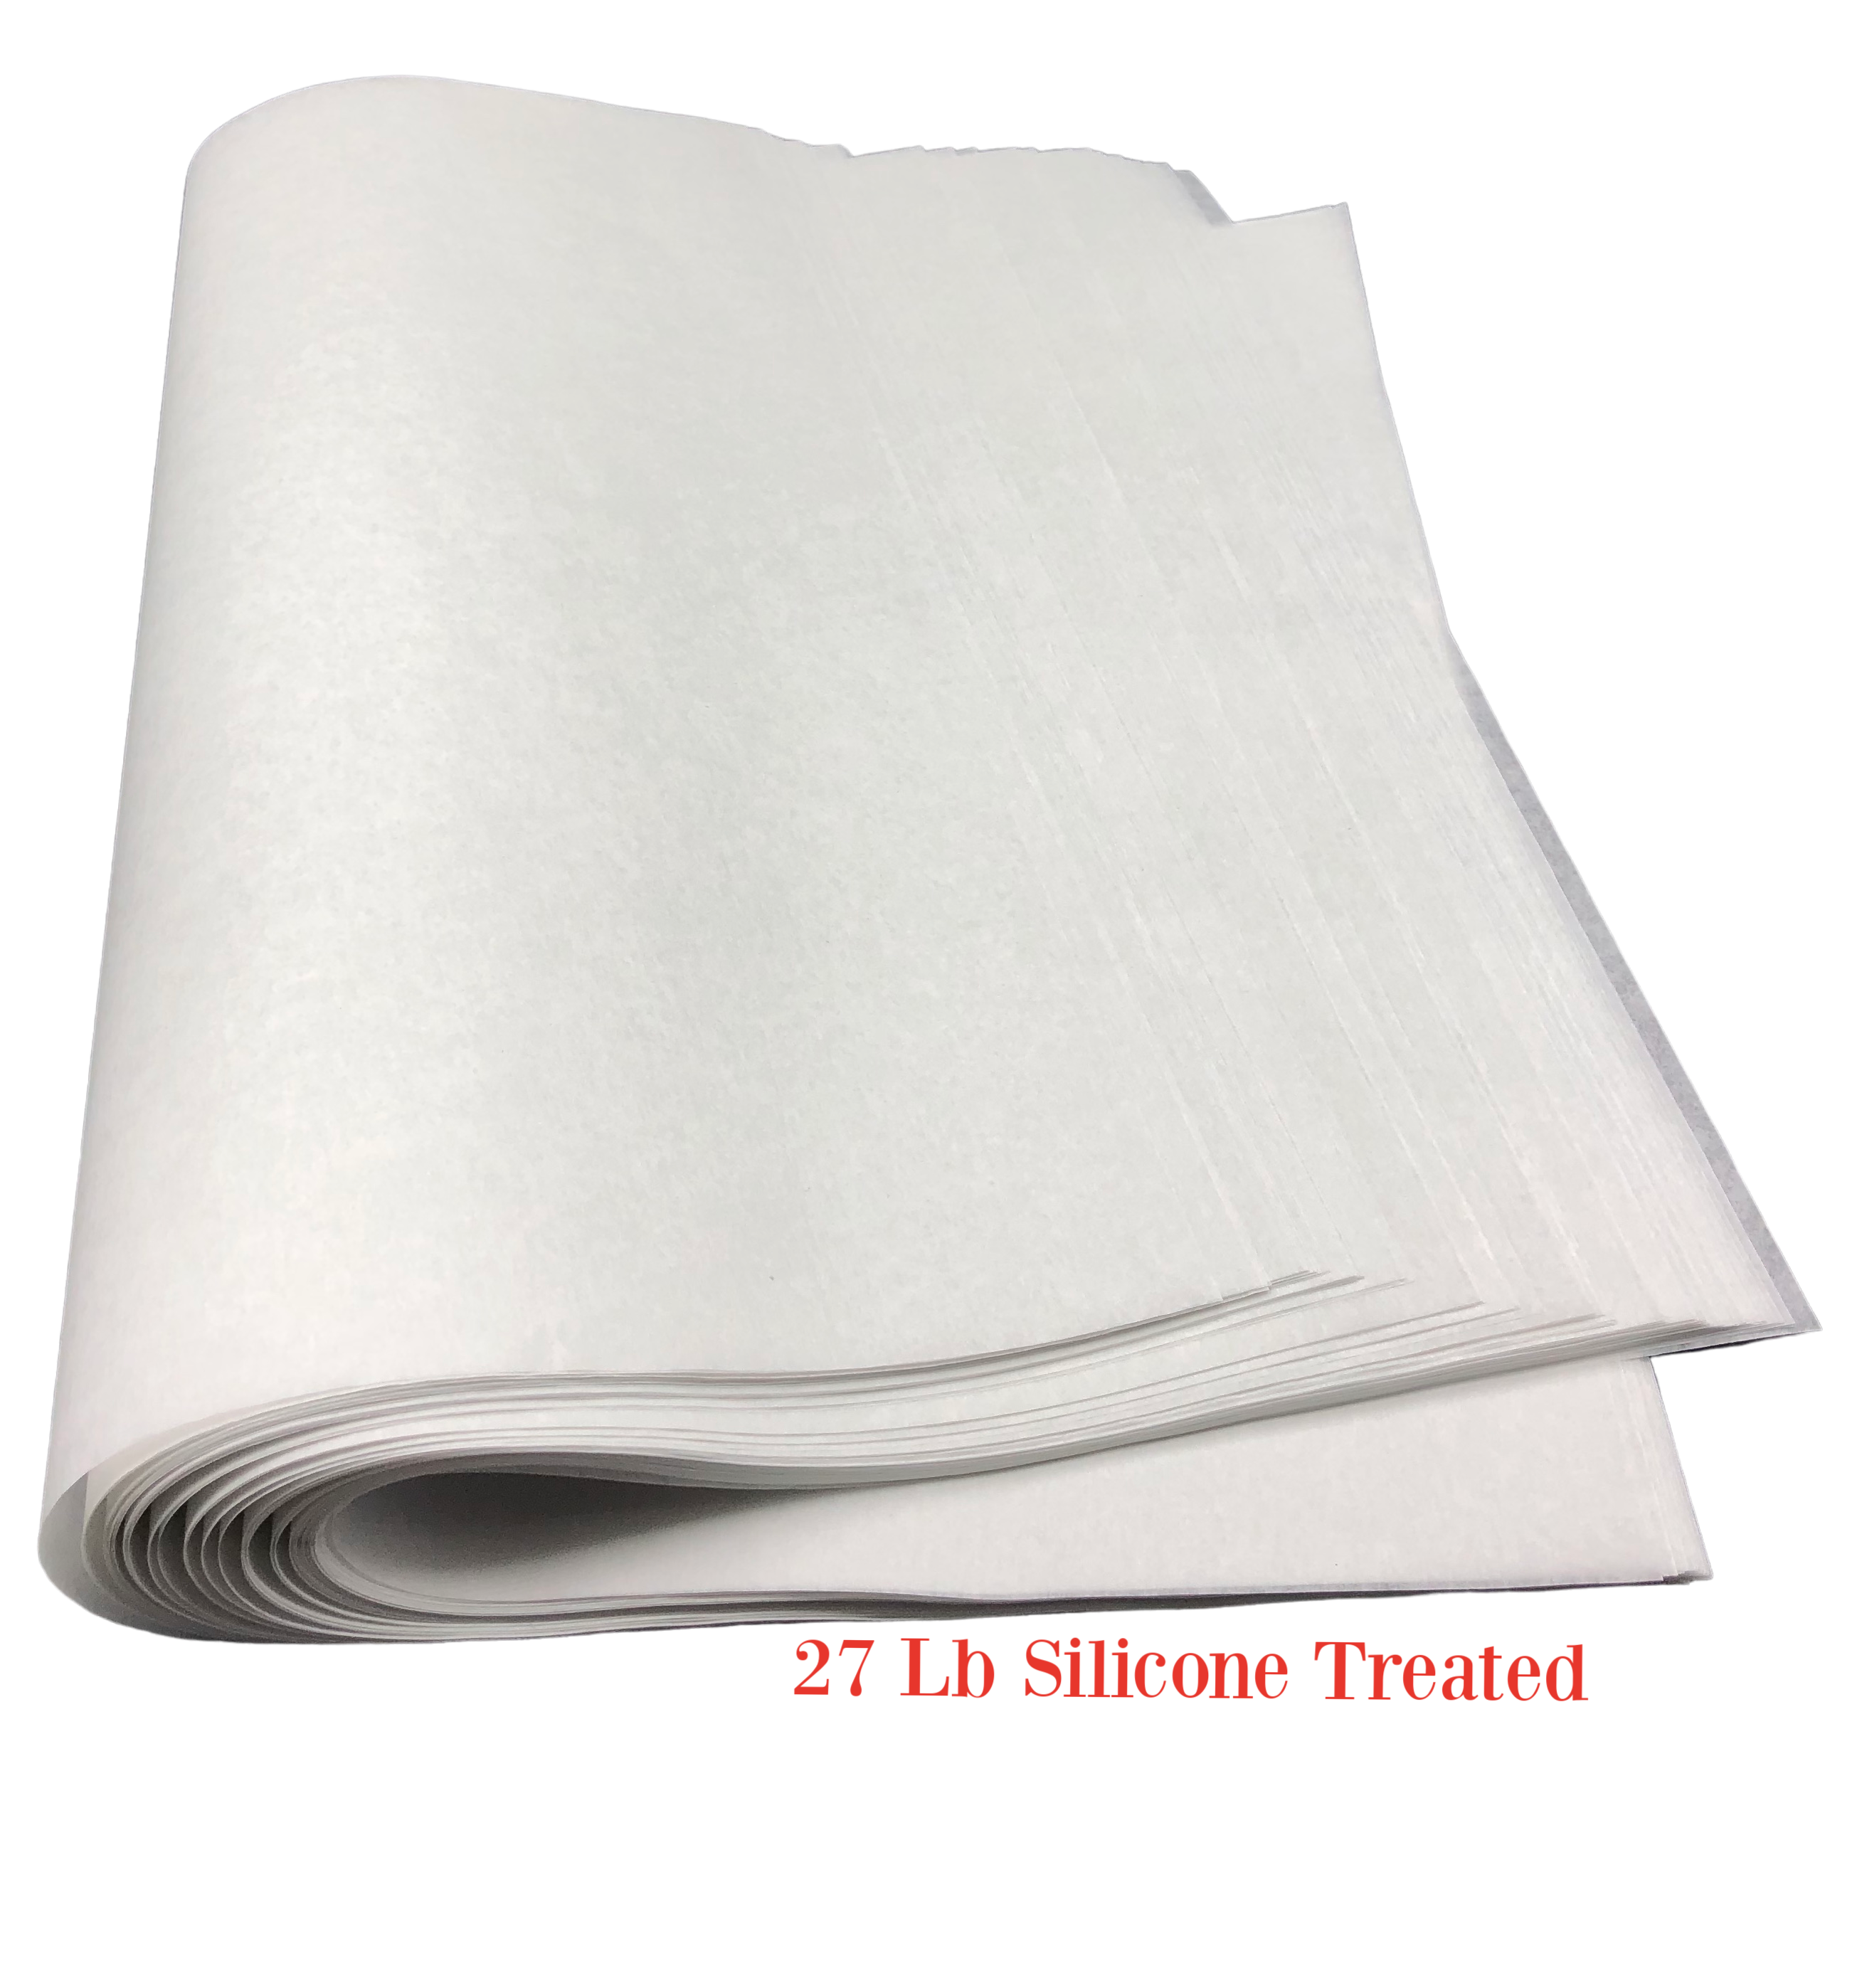 Silicone Parchment Paper Sheets (Half Size) - 1000/Case